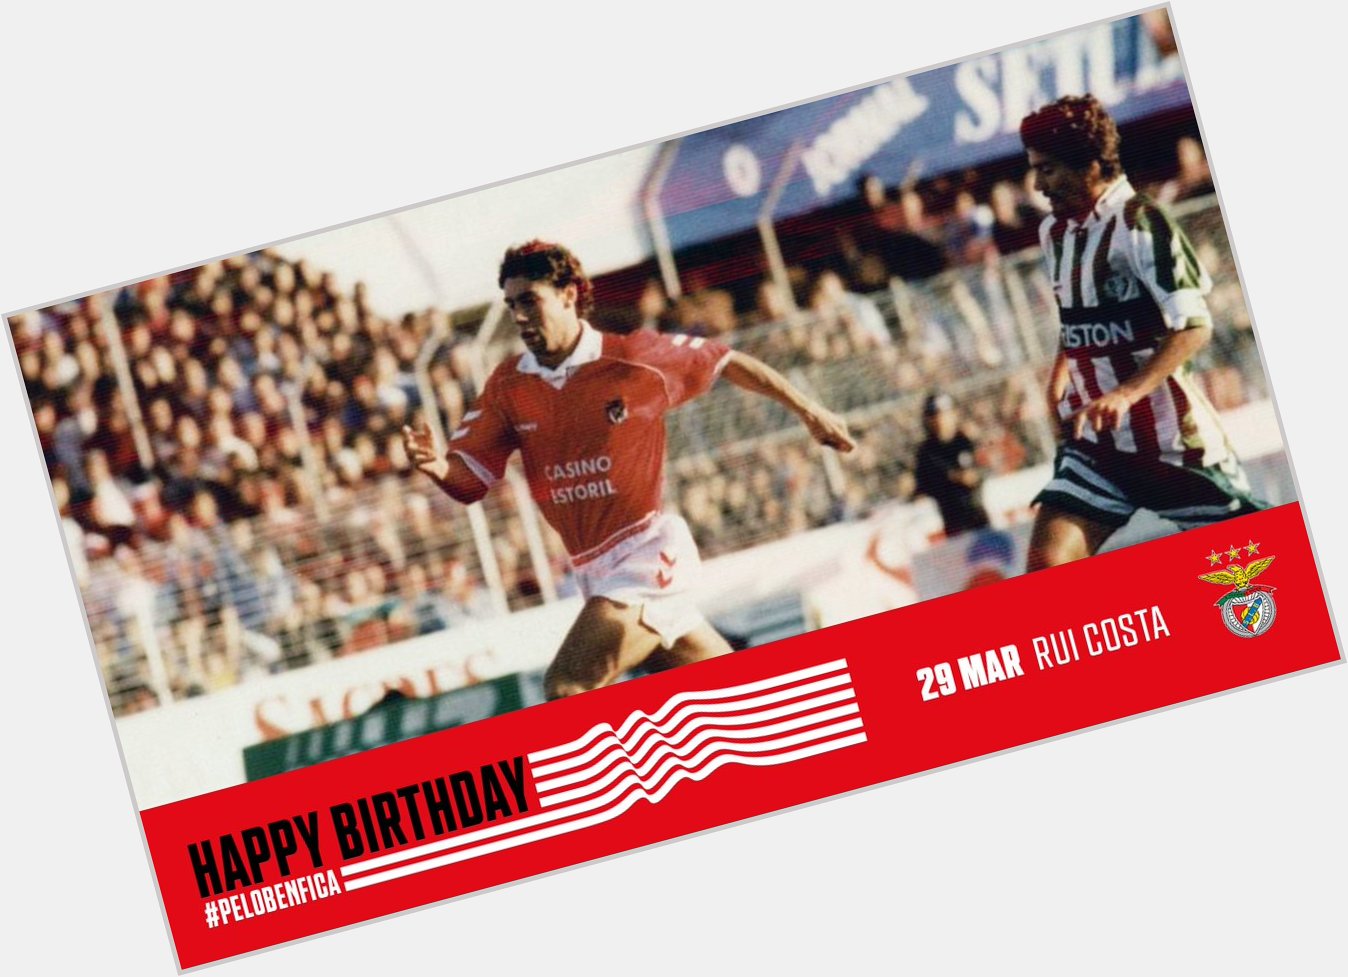   Happy Birthday, Rui Costa! 